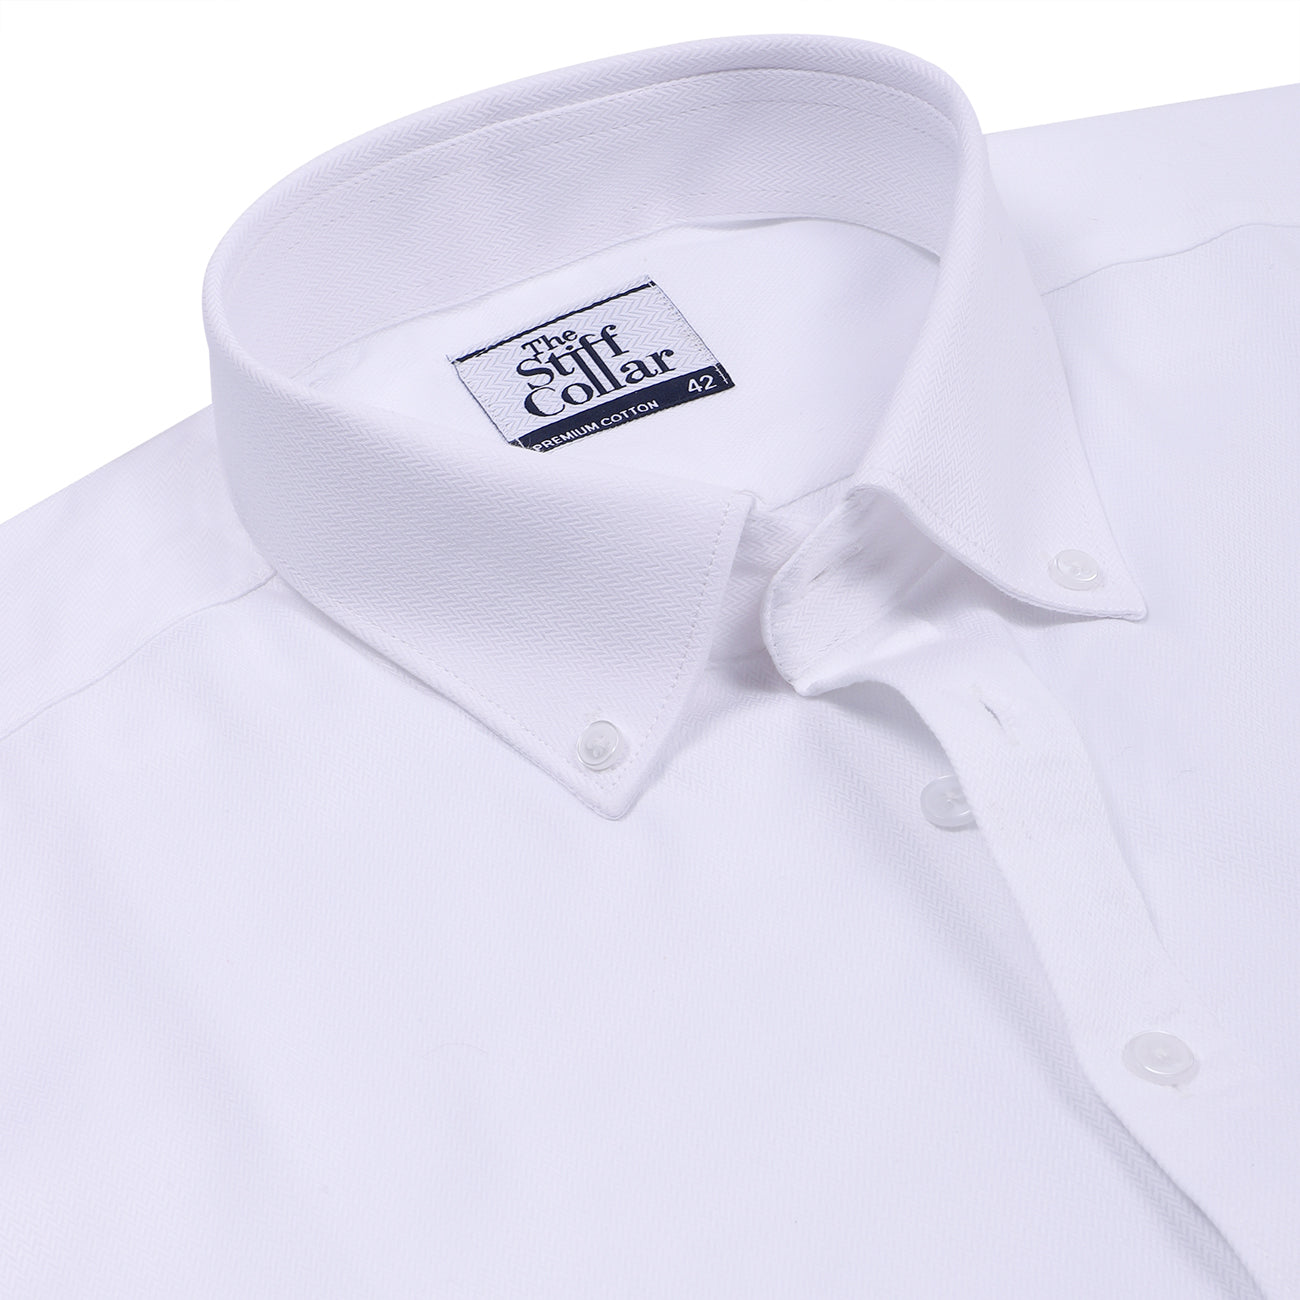 Luthai Absolute White Herringbone Button Down 2 Ply Premium Giza Cotton Shirt